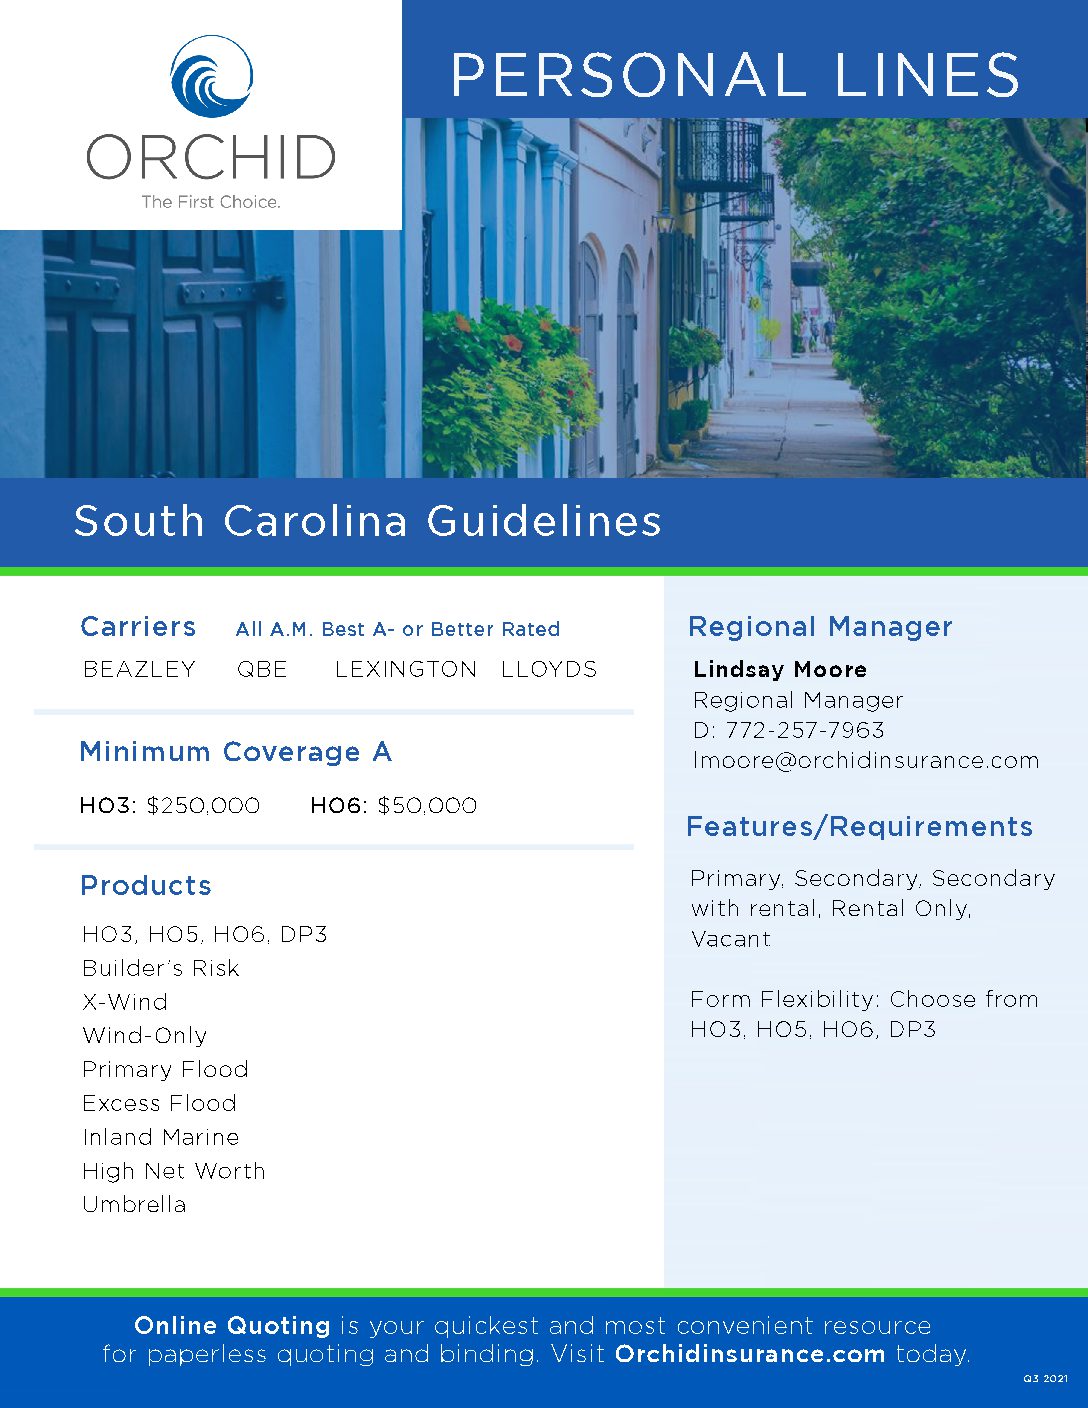 South Carolina Personal Lines Insurance